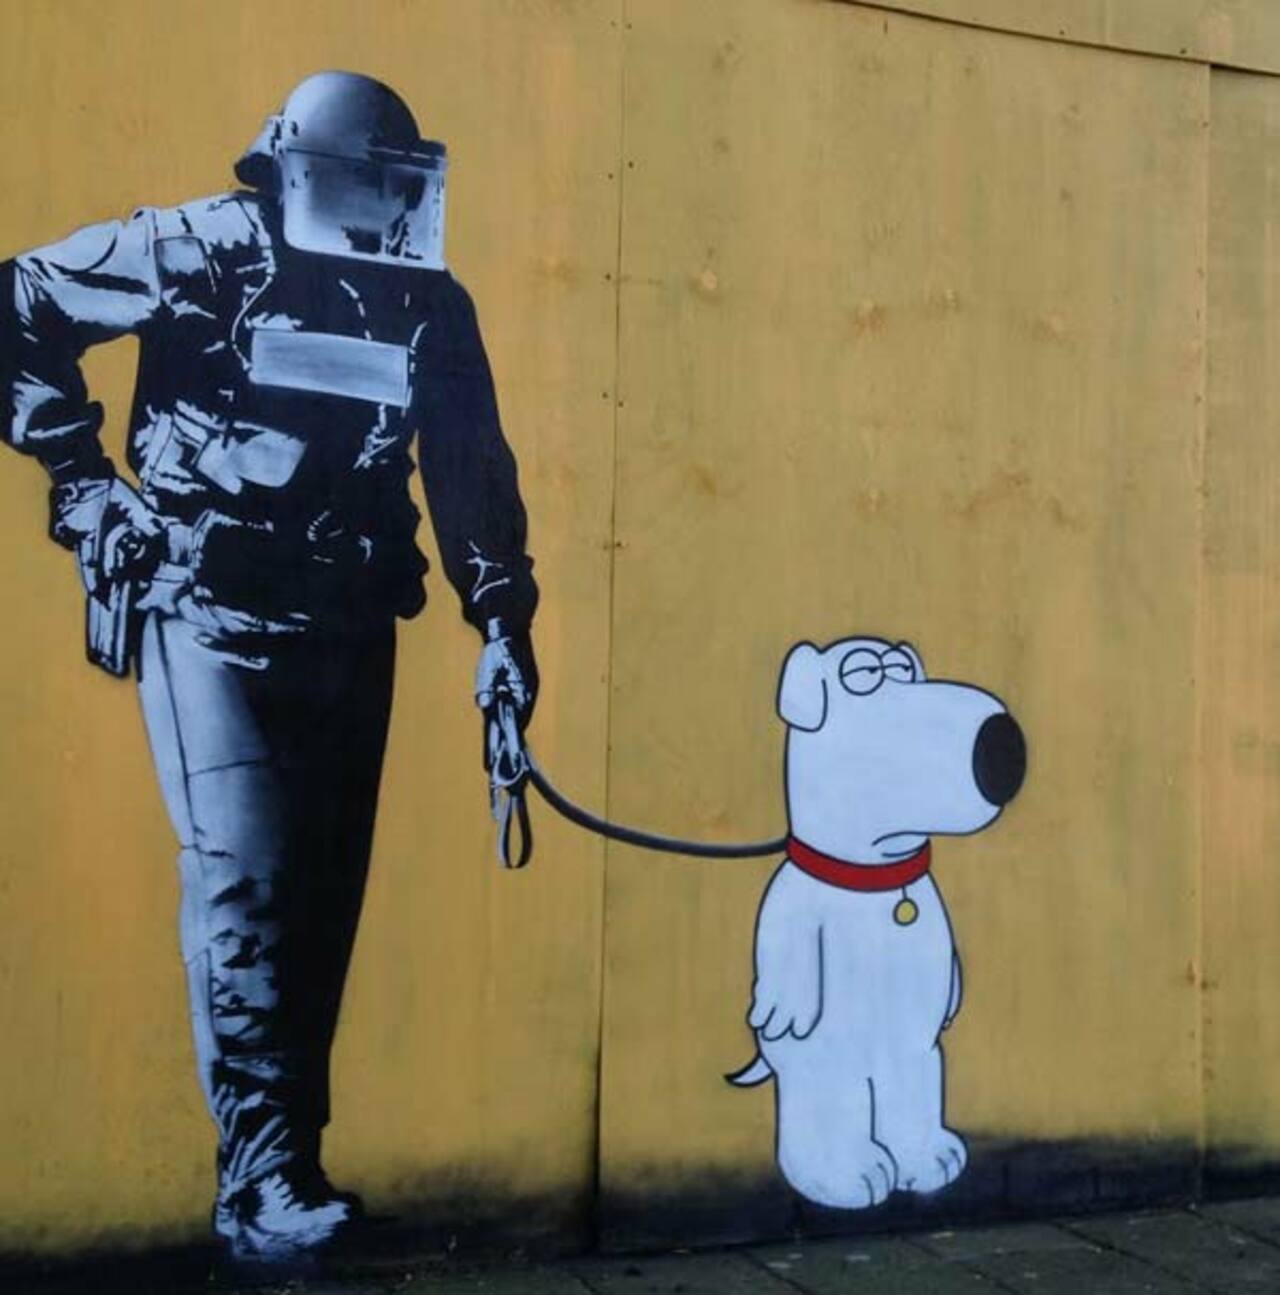 RT @hypatia373: #art #streetart #graffiti http://t.co/JAfi0aoKUN